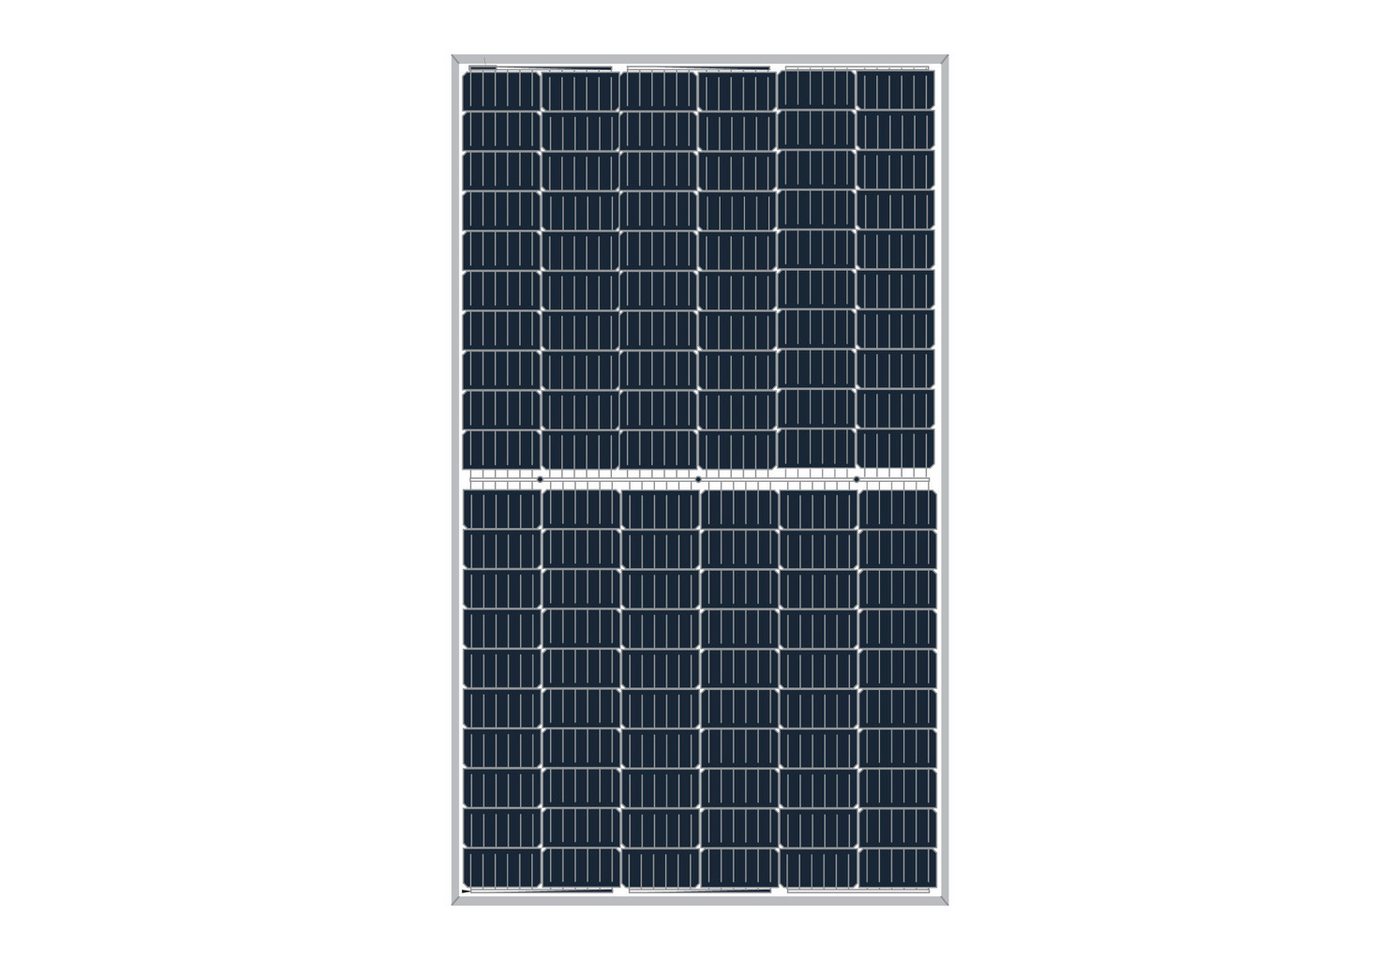 Campergold Solarmodul 360W Solarpanel PERC Photovoltaik Solarmodul, 10440W! 29x 360W Monokristalline Silberrahmen Solarpanel von Campergold